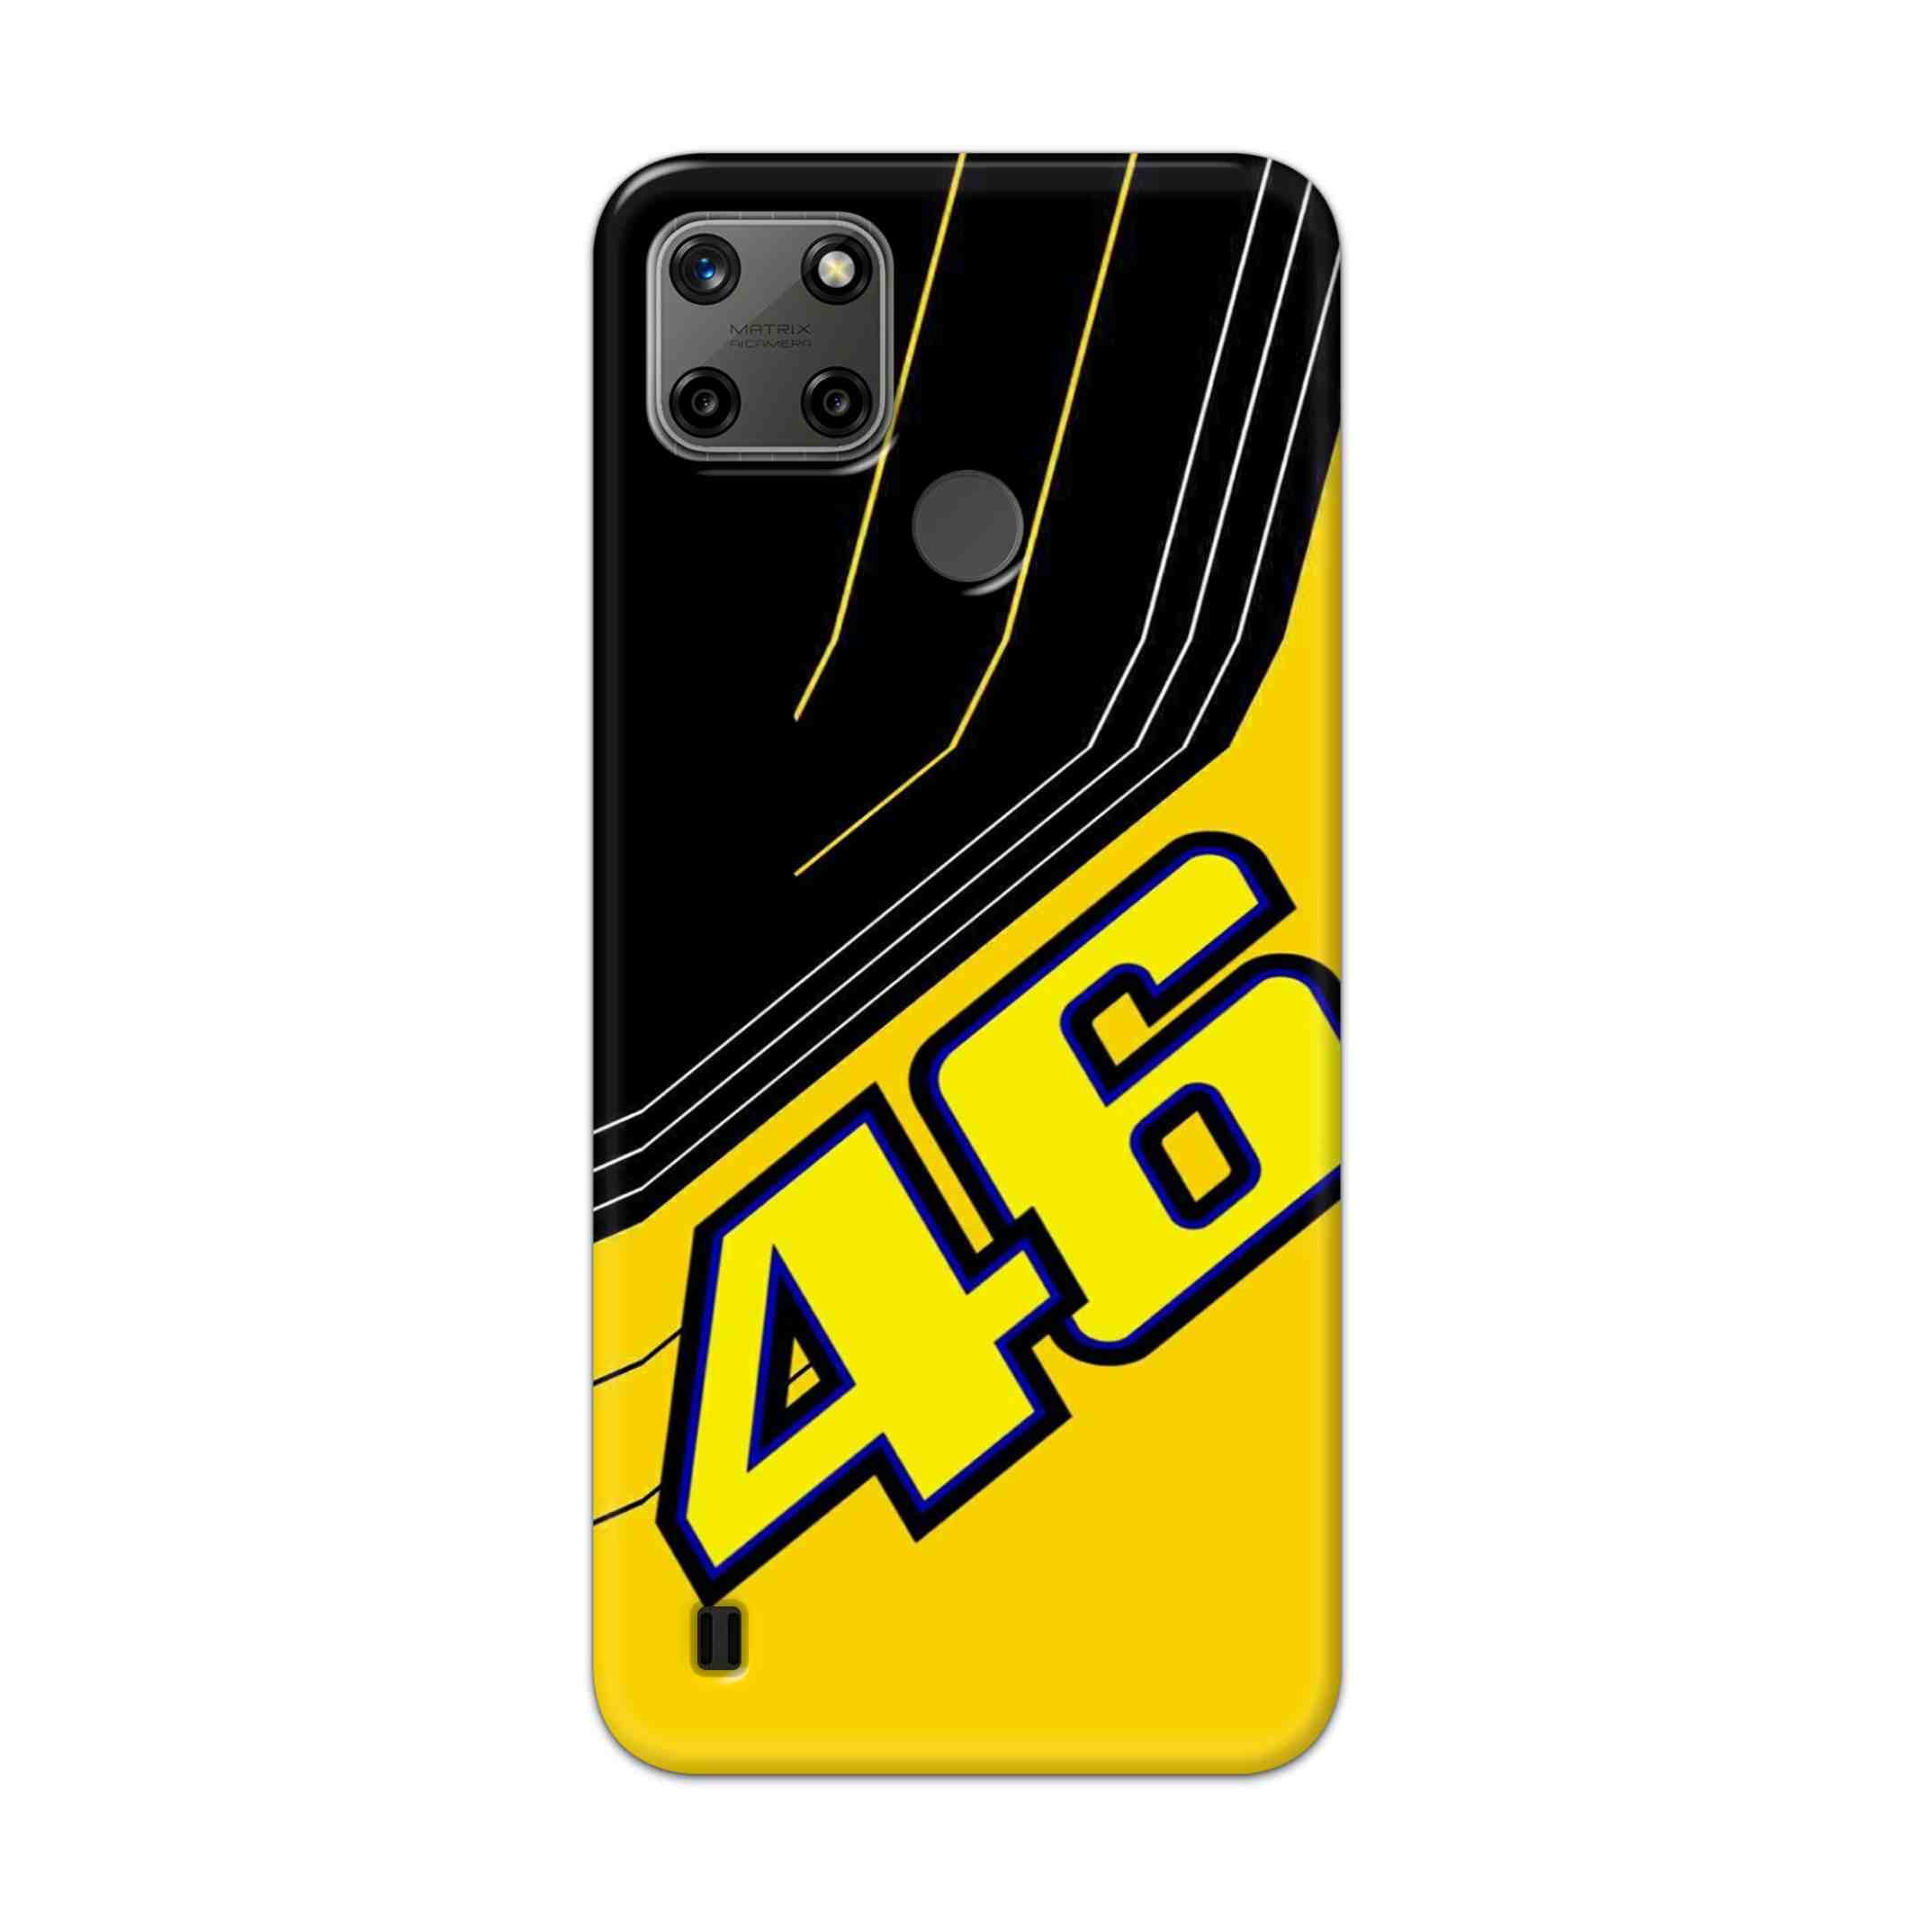 Buy 46 Hard Back Mobile Phone Case Cover For Realme C25Y Online